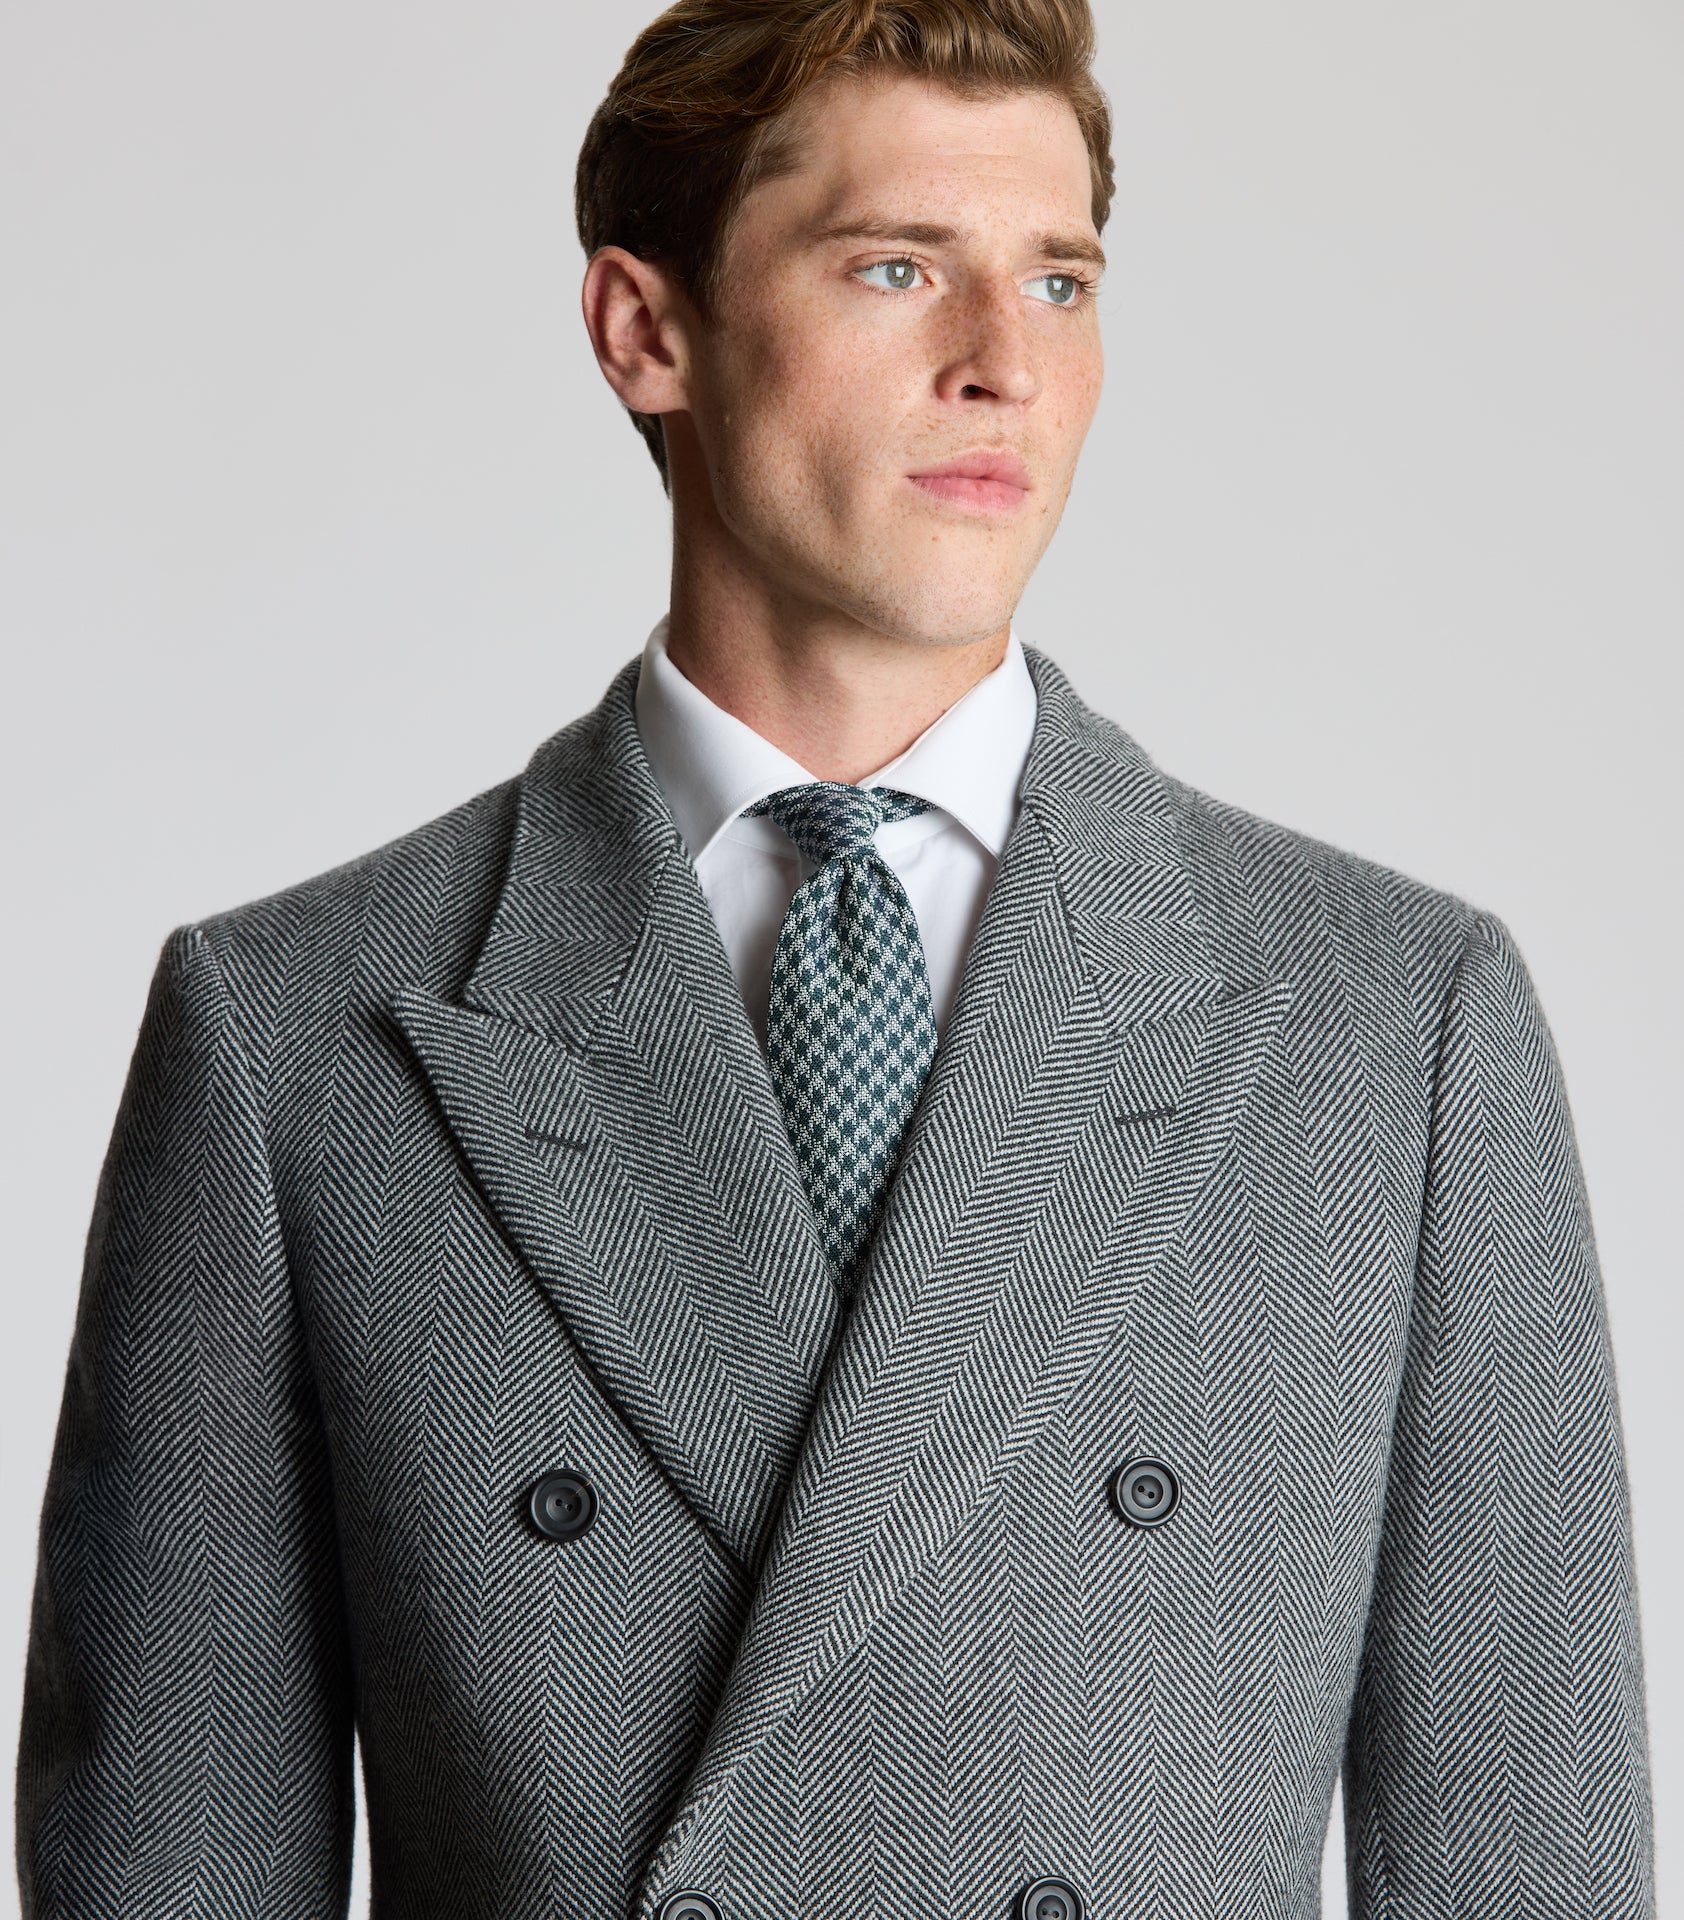 Grey Wool Herringbone Double Breasted Overcoat